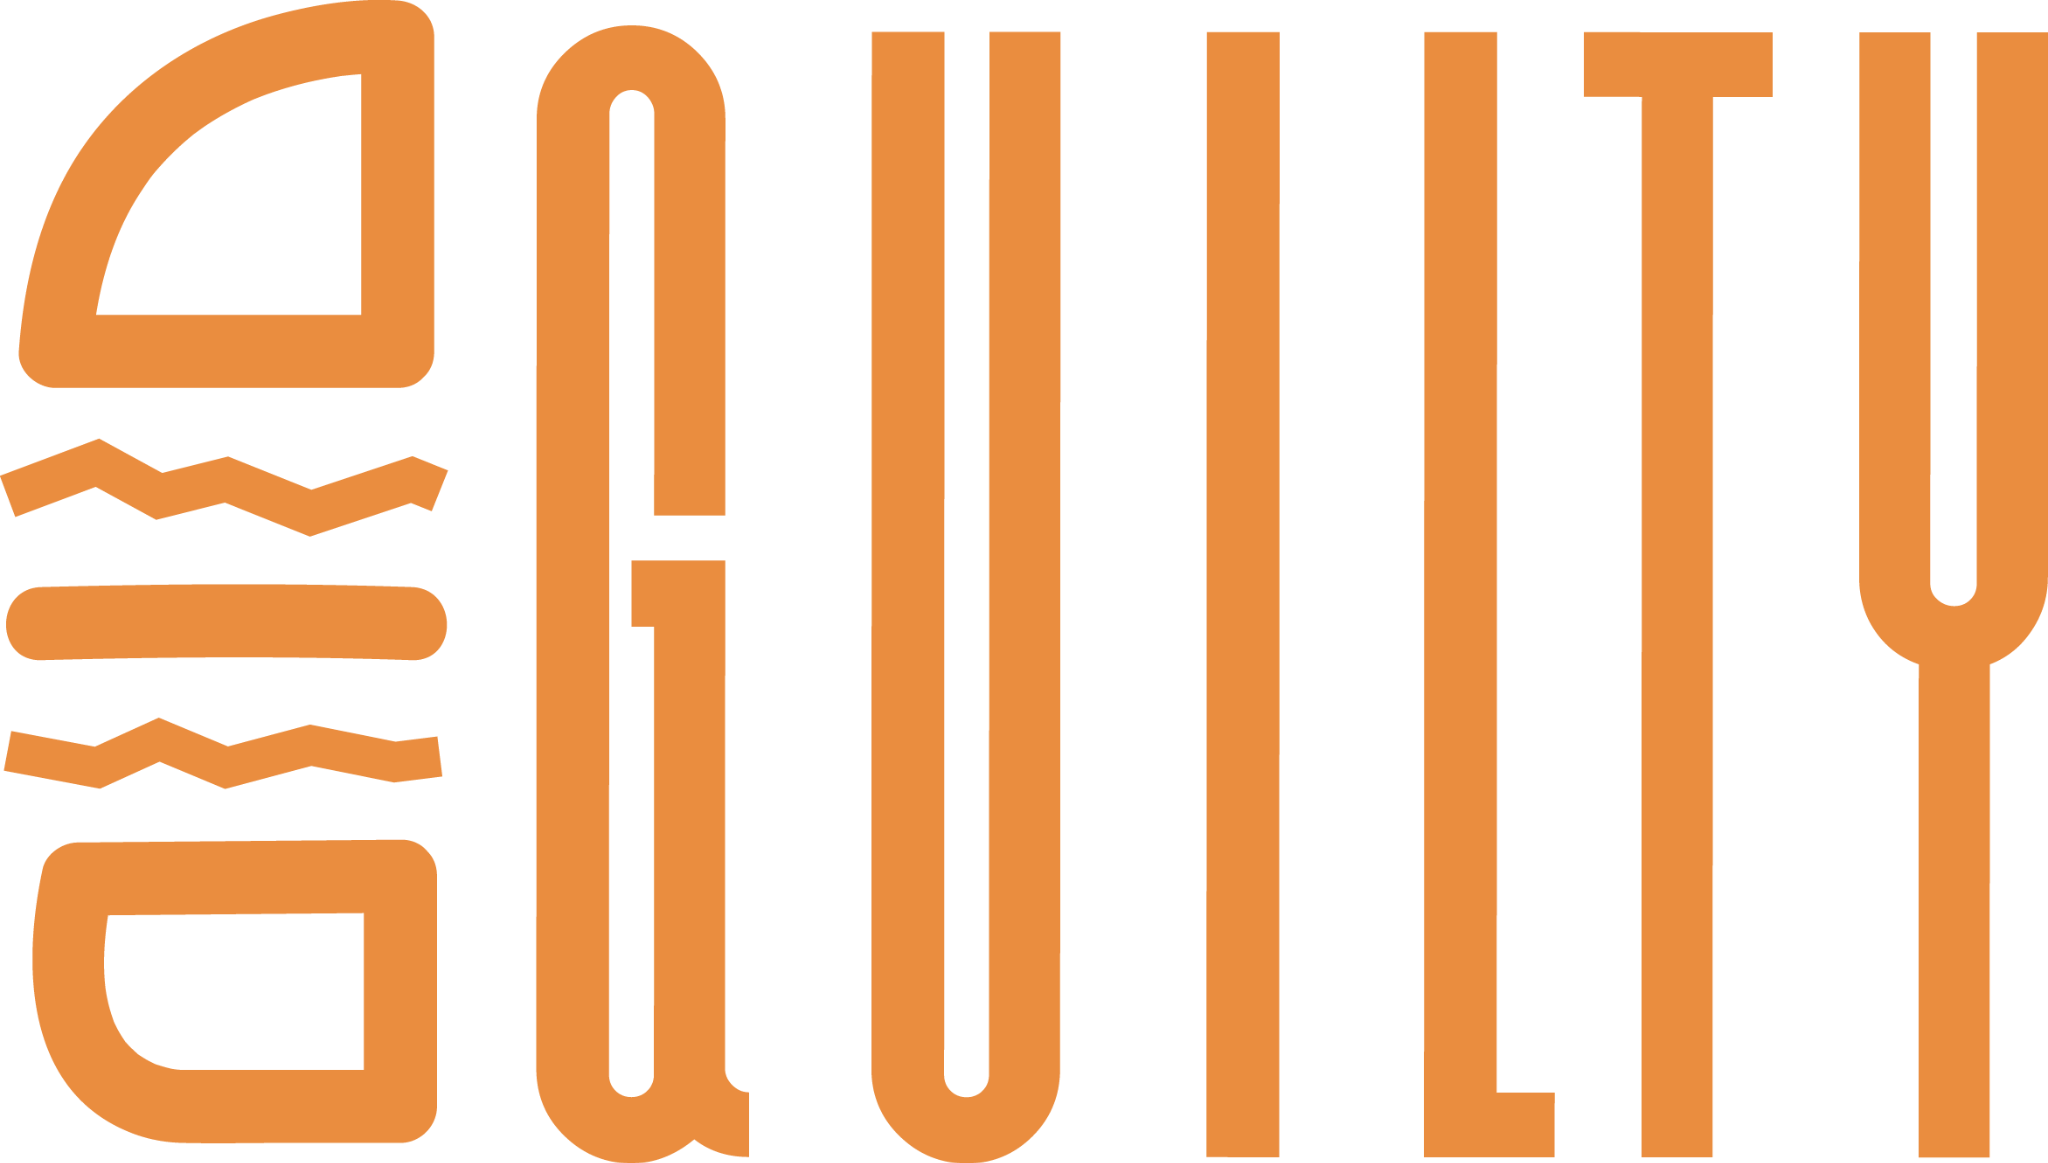 Guilty Grill logo scroll